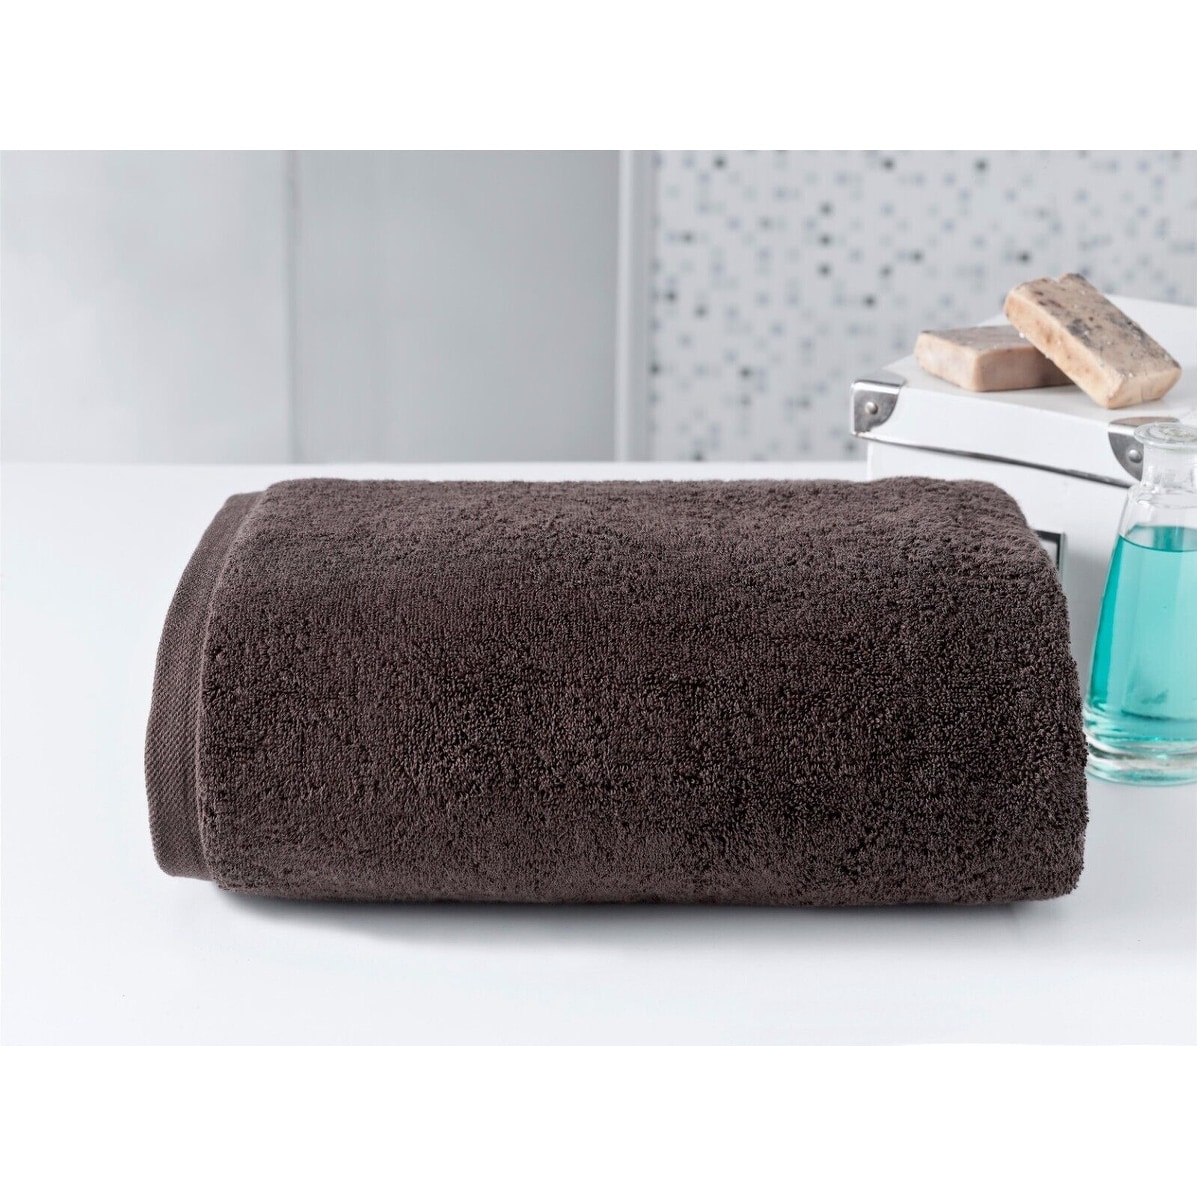 TEXTILOM 100% Turkish Cotton Oversized Luxury Bath Sheets, Jumbo & Extra  Large Bath Towels Sheet for Bathroom and Shower with Maximum Softness 